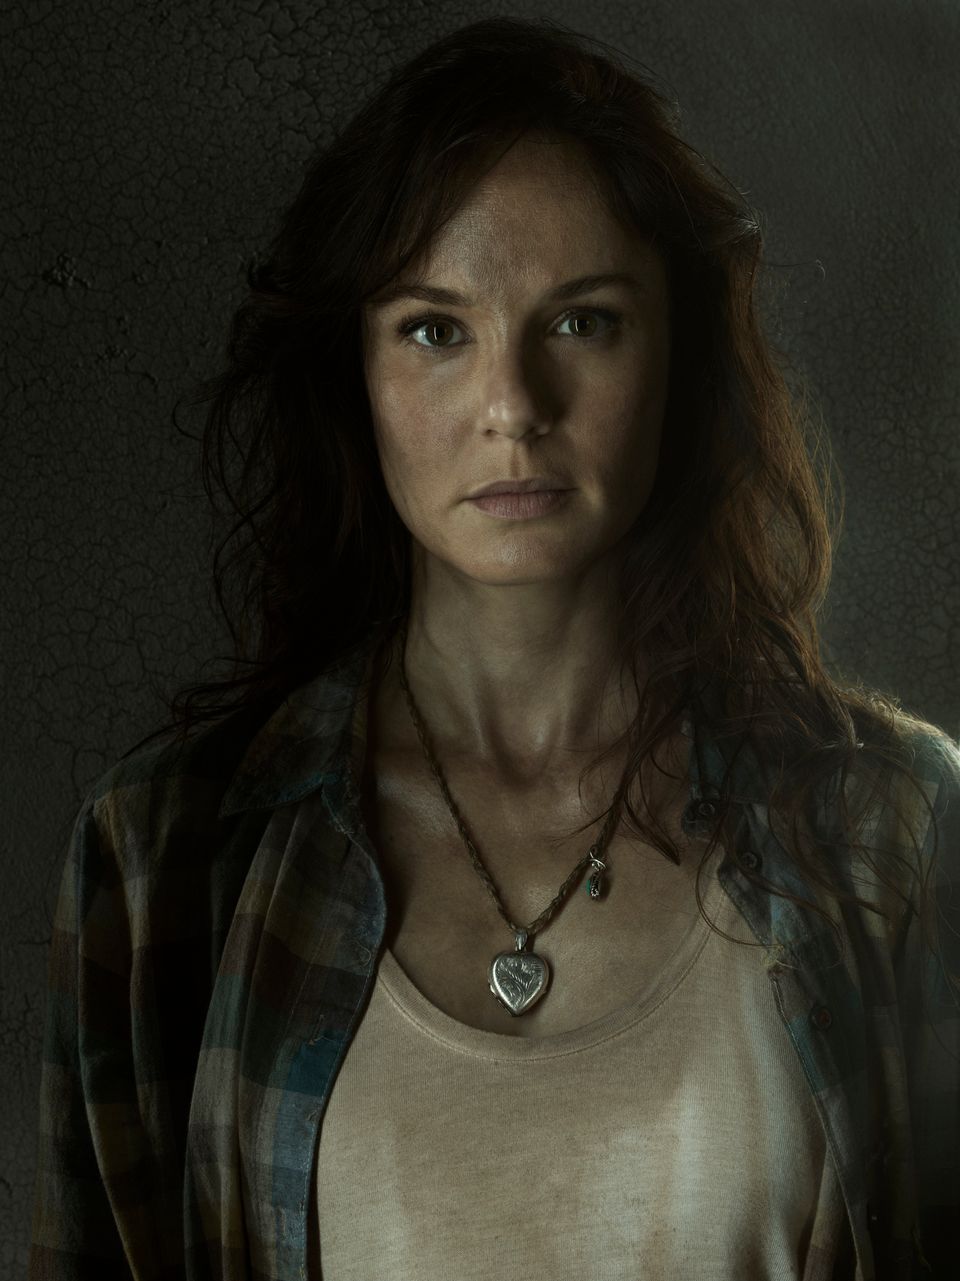 Lori, "The Walking Dead"